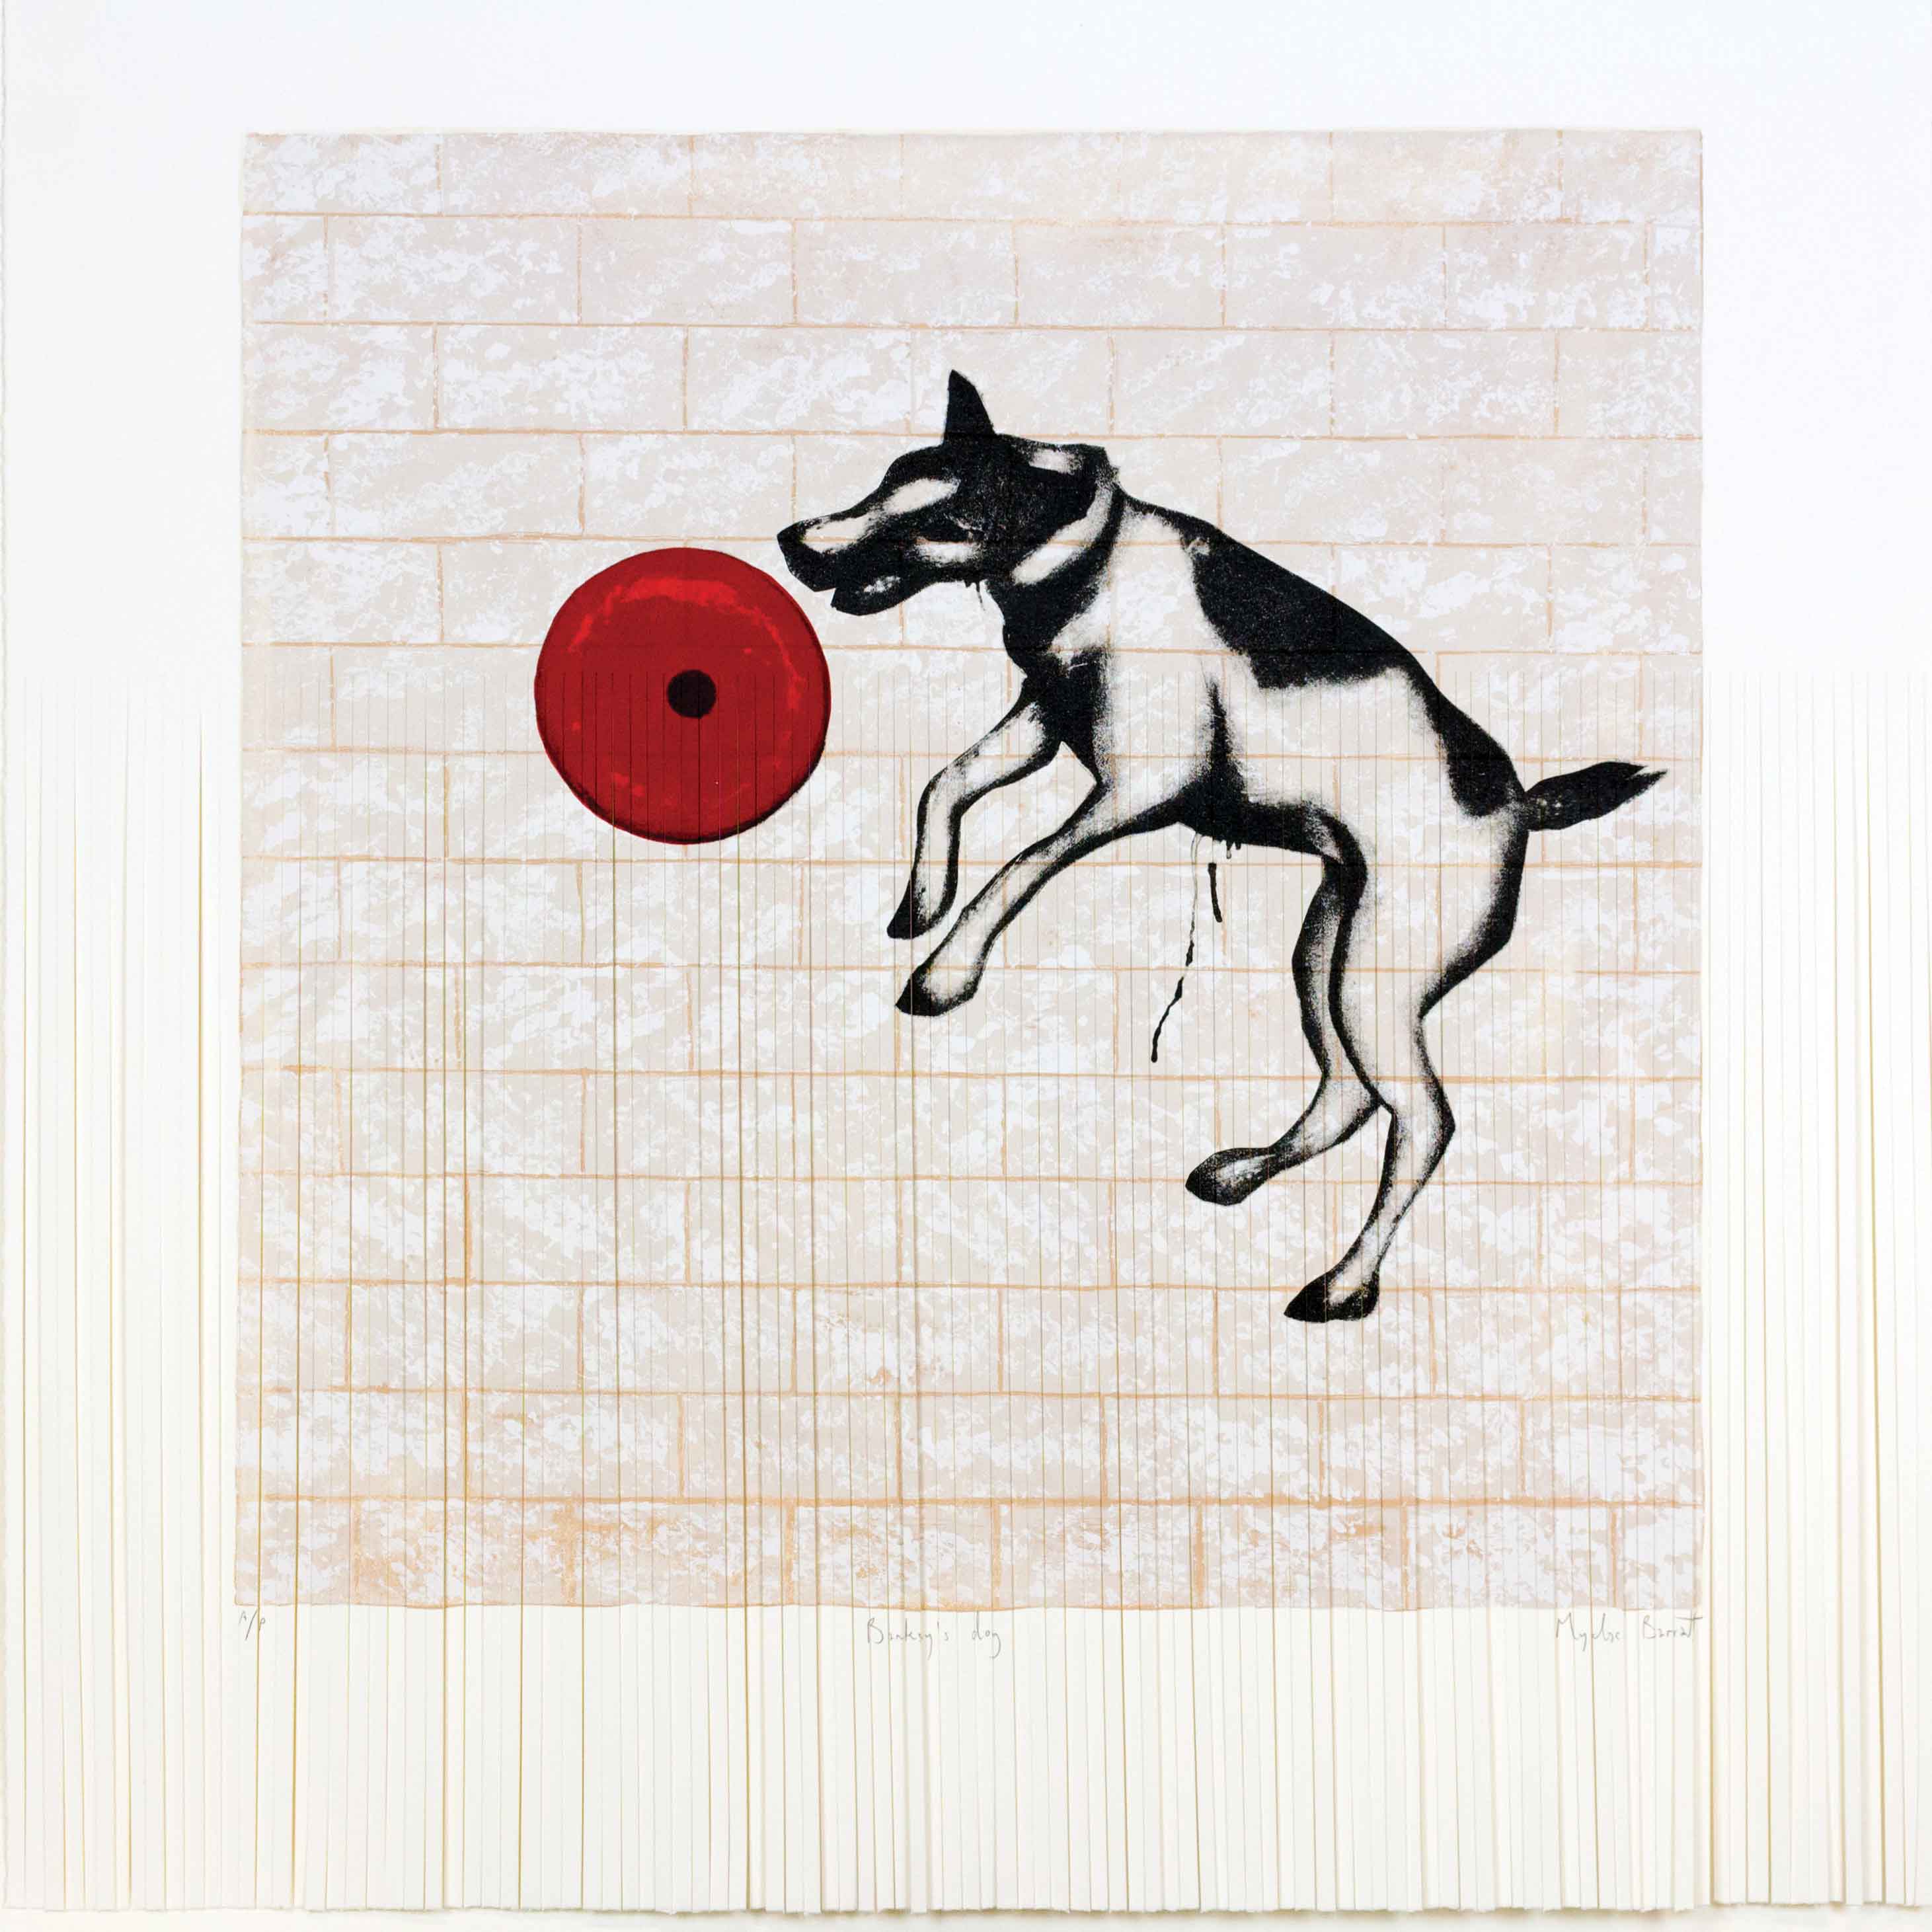 Art greeting card by Mychael Barratt, Banksy style dog jumping for doughnut, shredded image